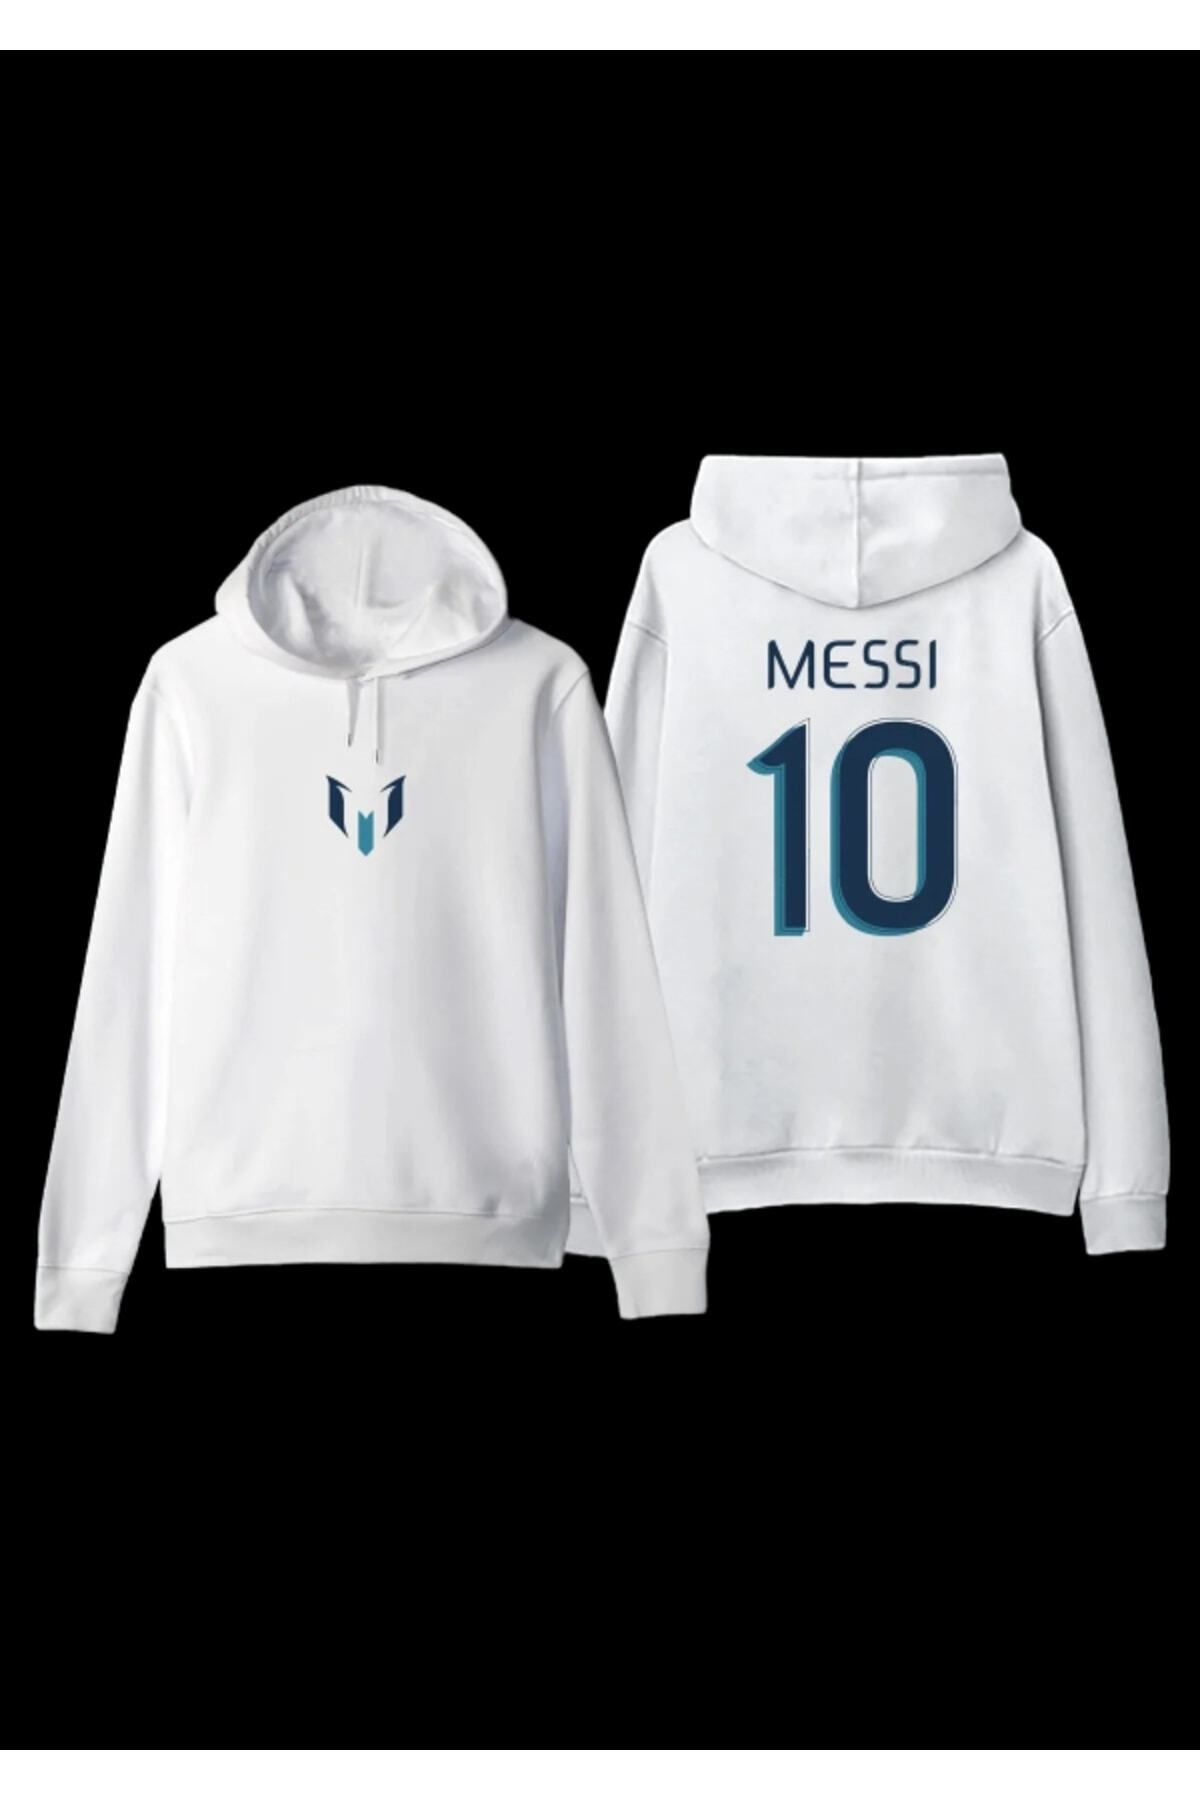 FULL TOLERANCE Lionel Messi 10 Numara Arjantin Forma Tasarım Baskılı Kapşonlu Unisex Hoodie Sweatshirt